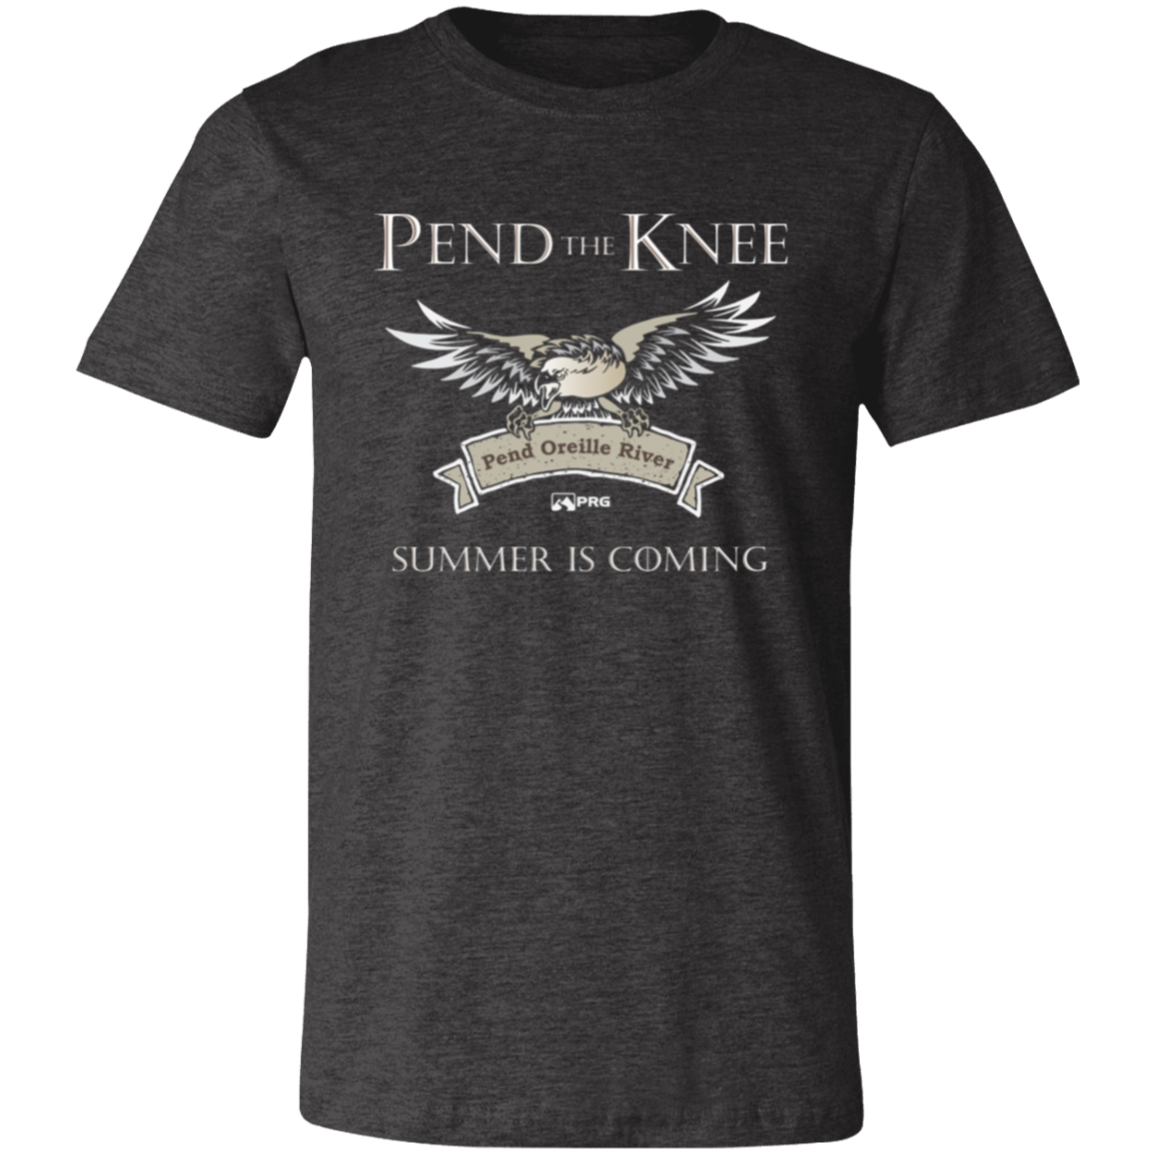 Pend the Knee - Shirt